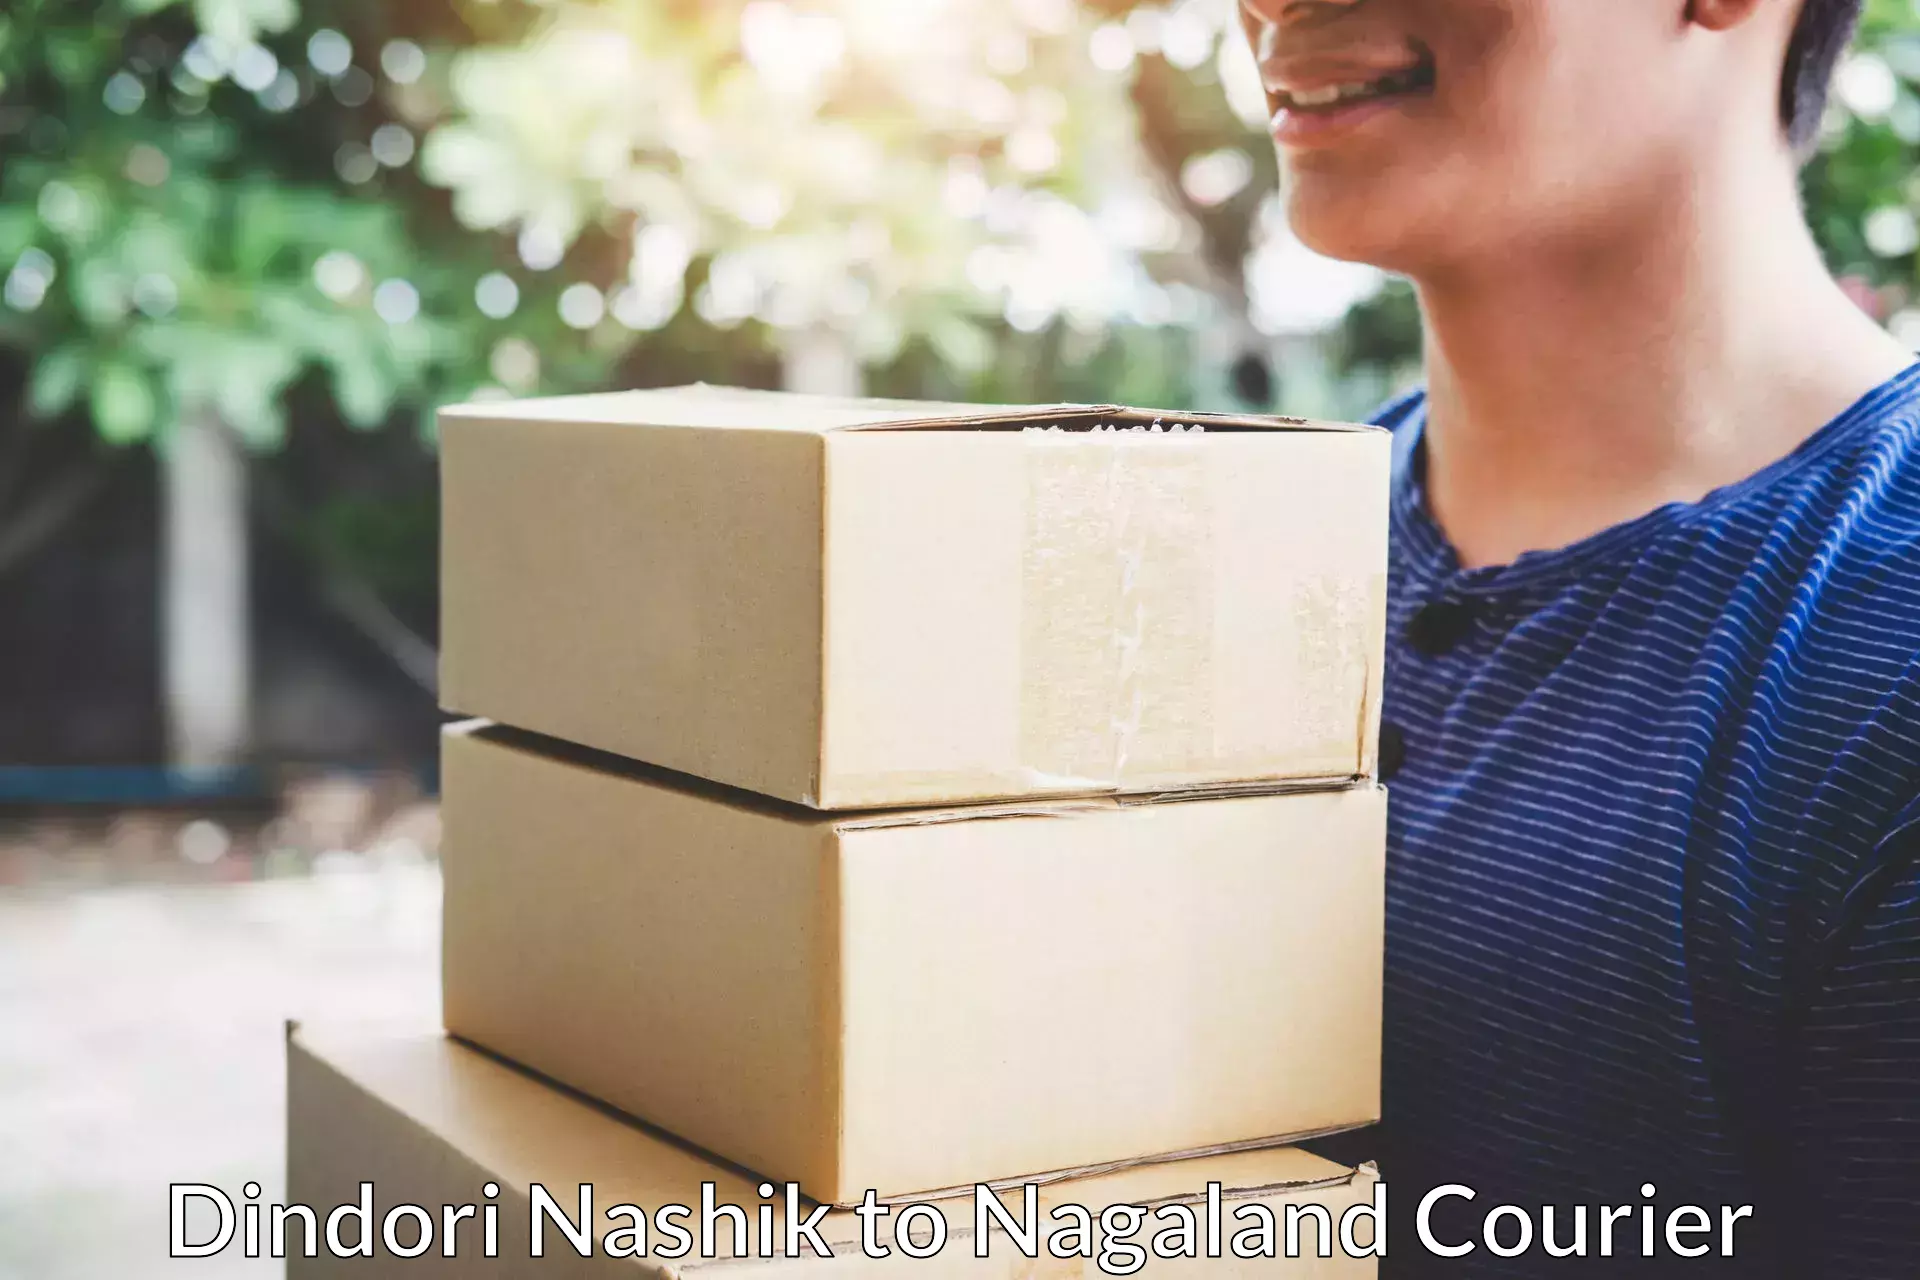 Efficient moving company Dindori Nashik to Nagaland